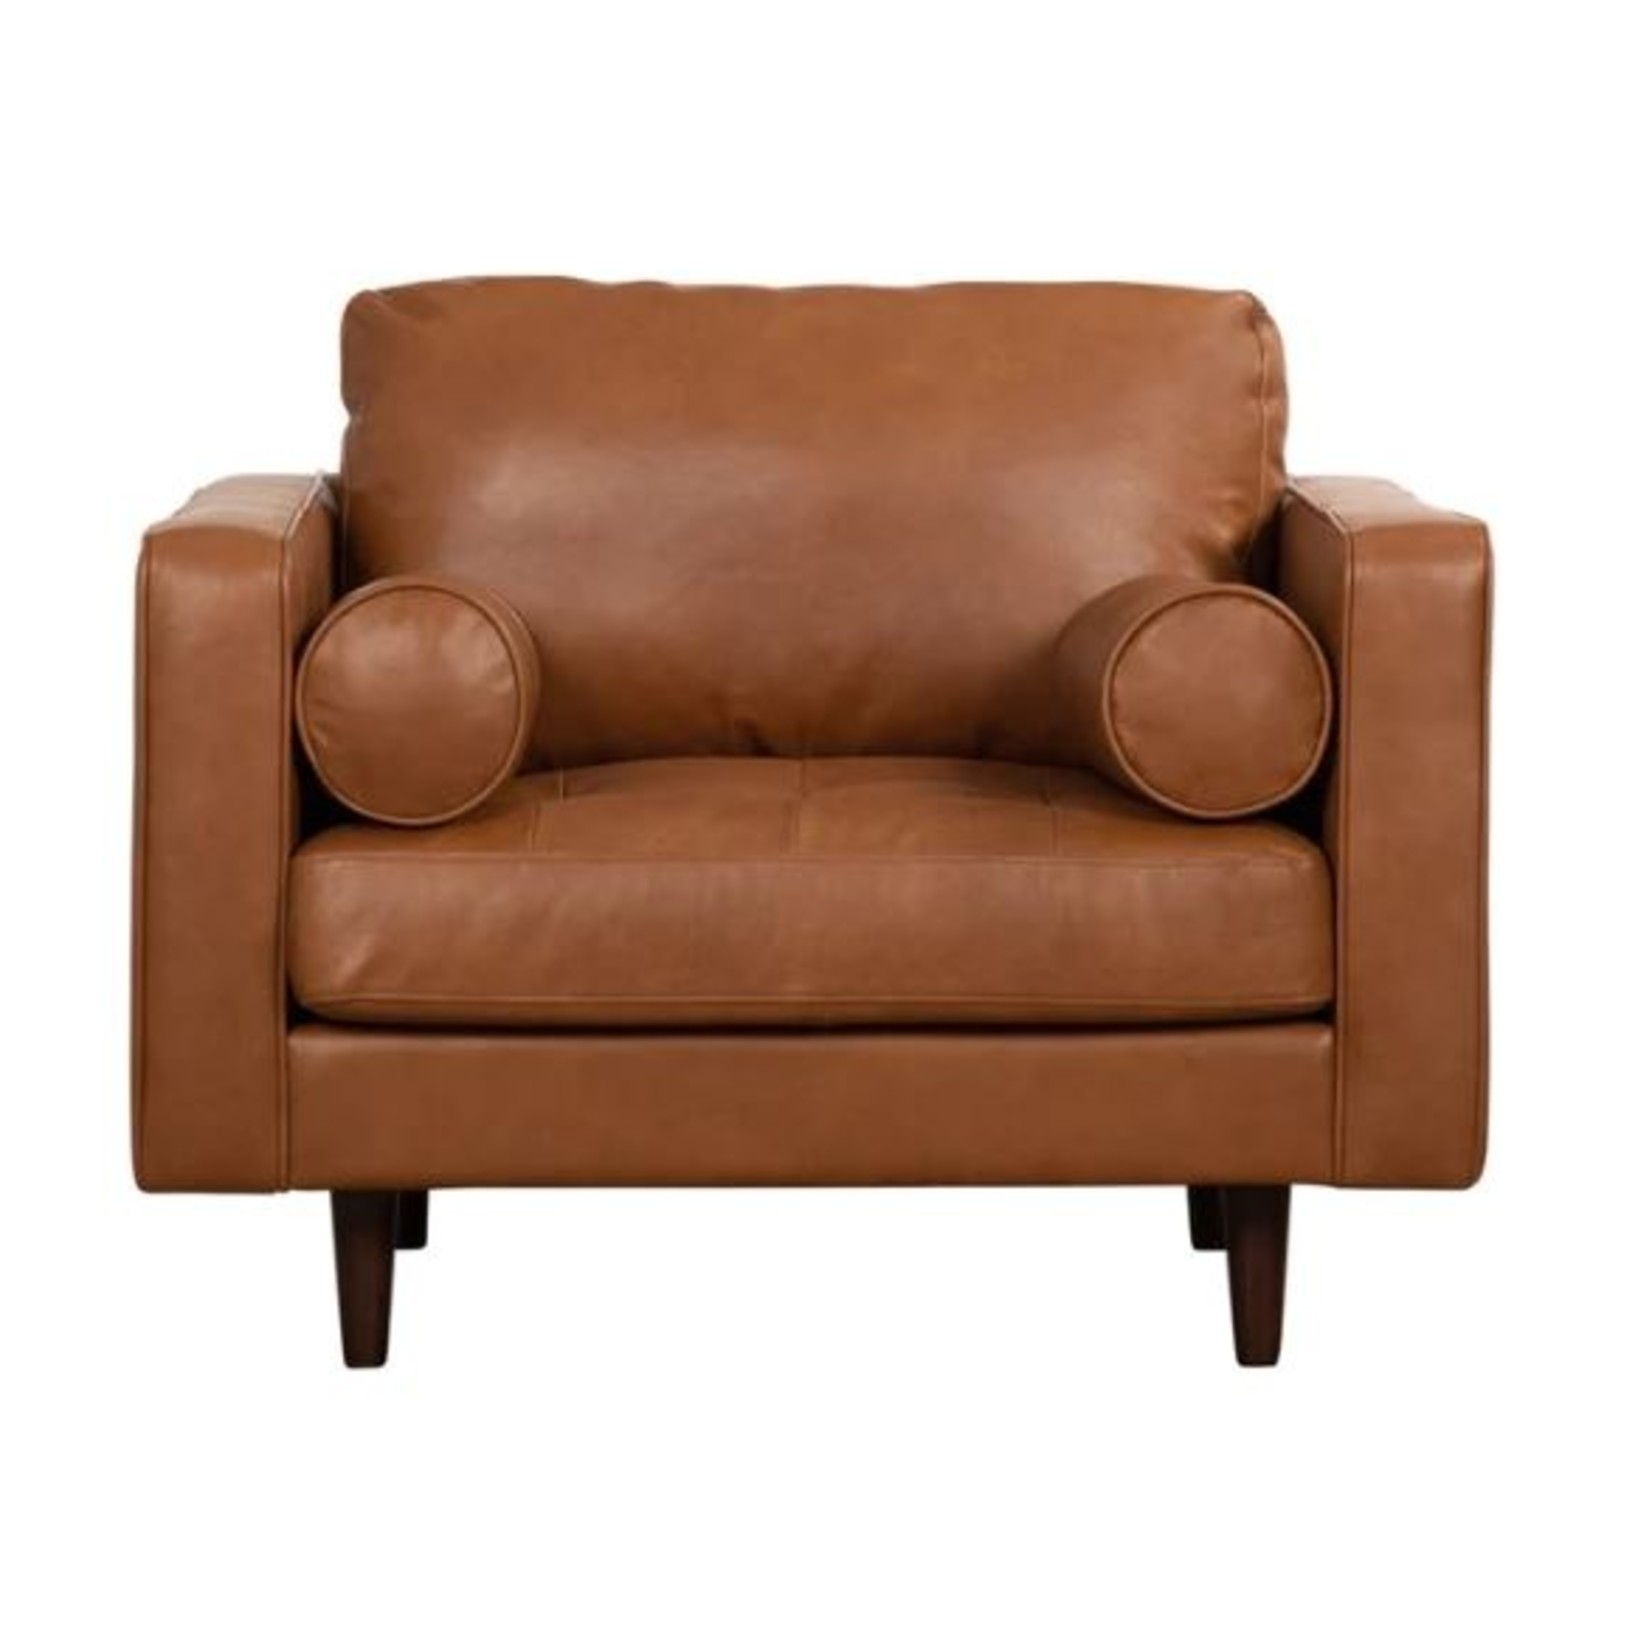 Mickler & Co. Roam Cognac Leather Chair